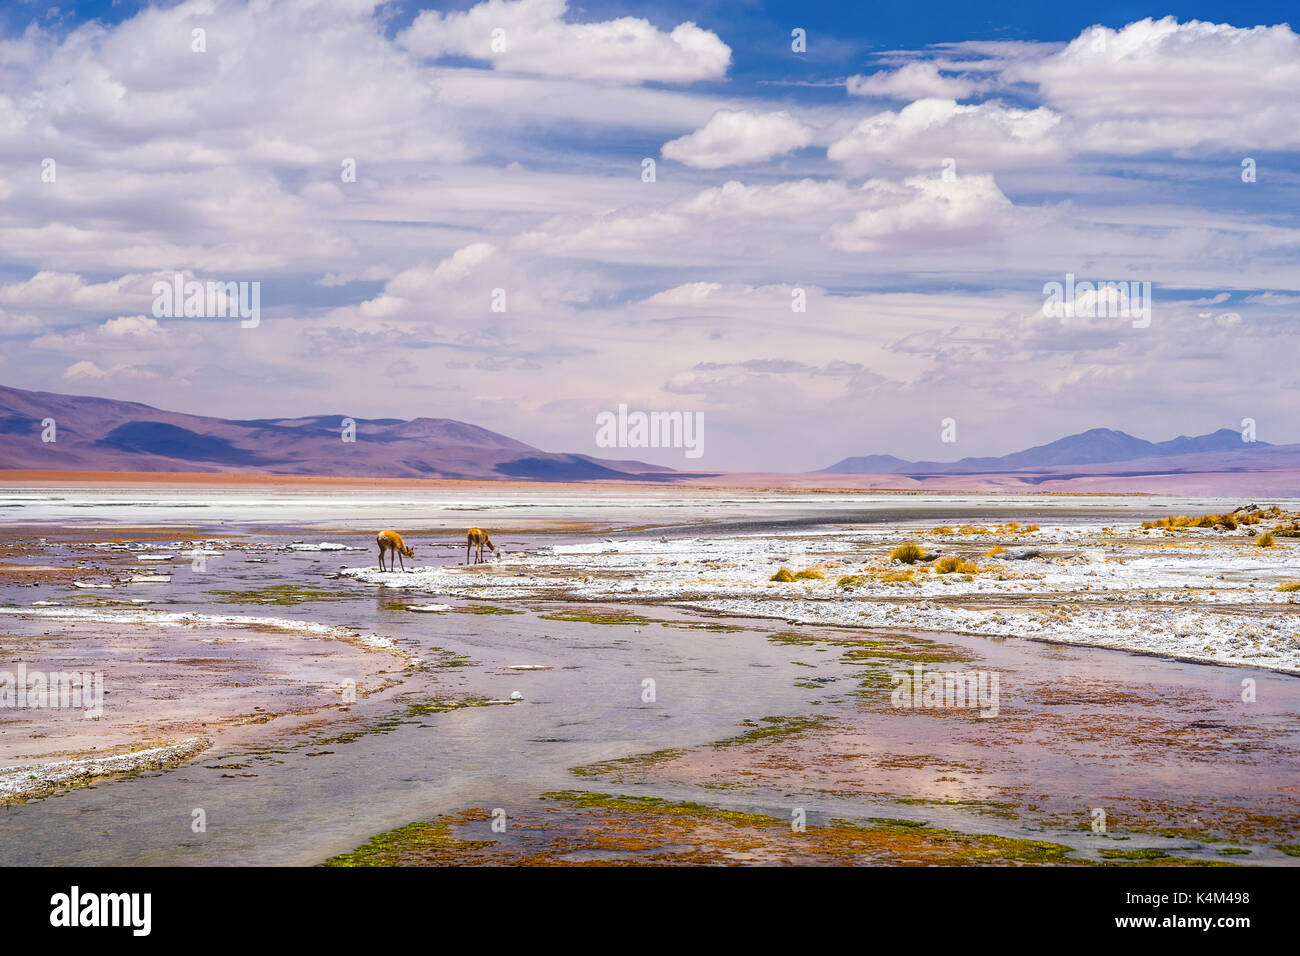 The Salar de Uyuni is the largest salt flat in the world. Stock Photo